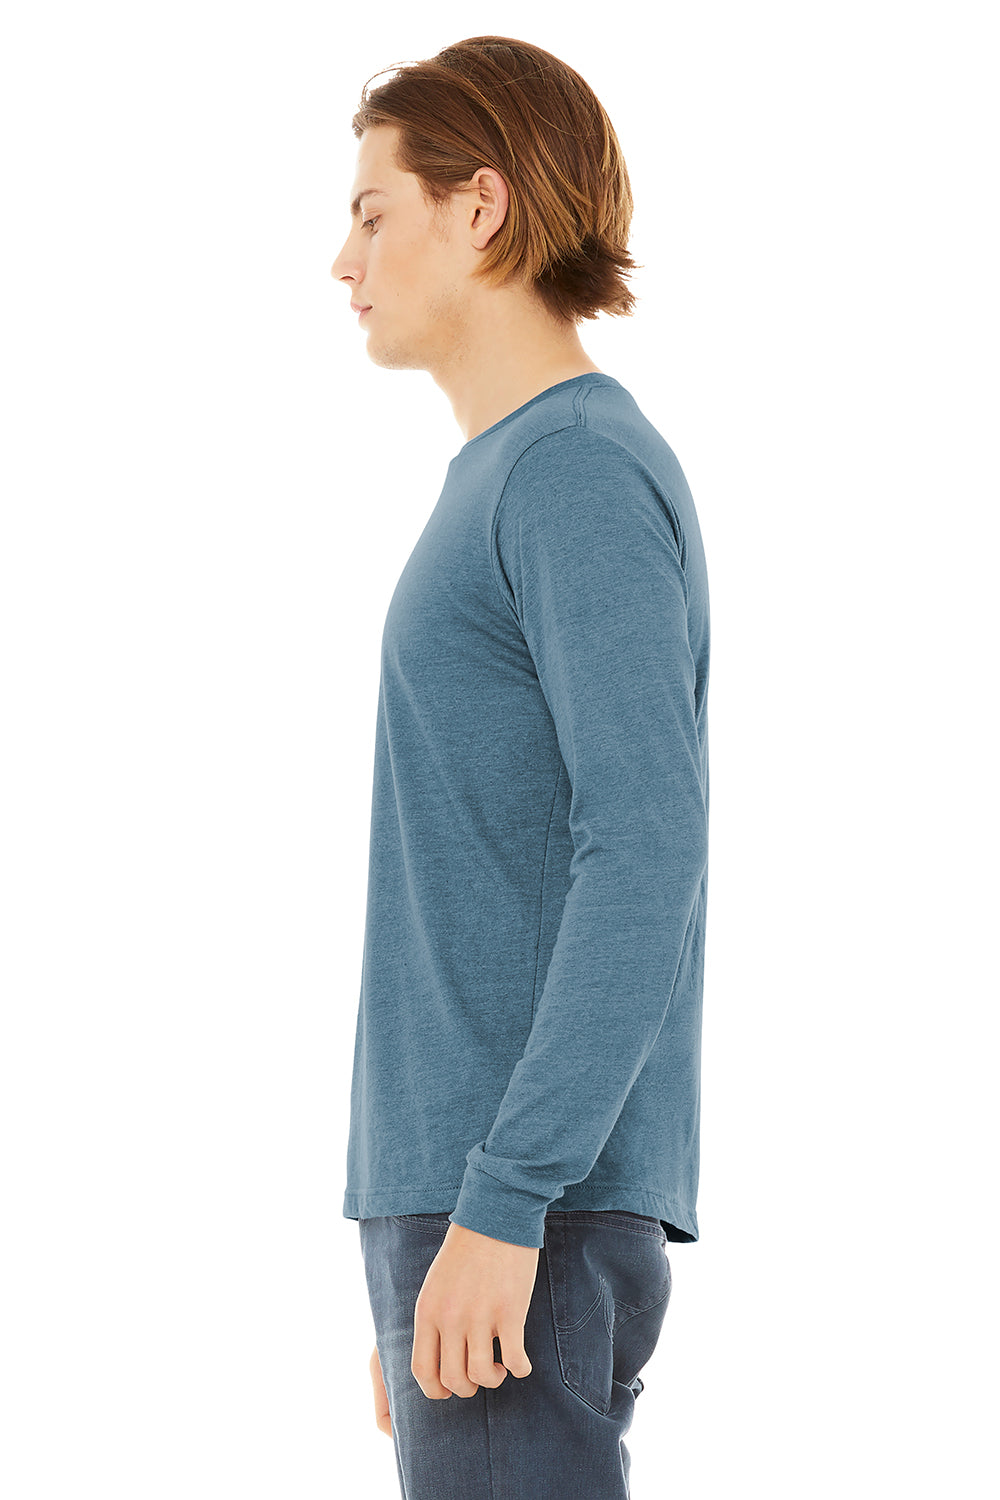 Bella + Canvas BC3513 Mens Long Sleeve Crewneck T-Shirt Denim Blue Model Side